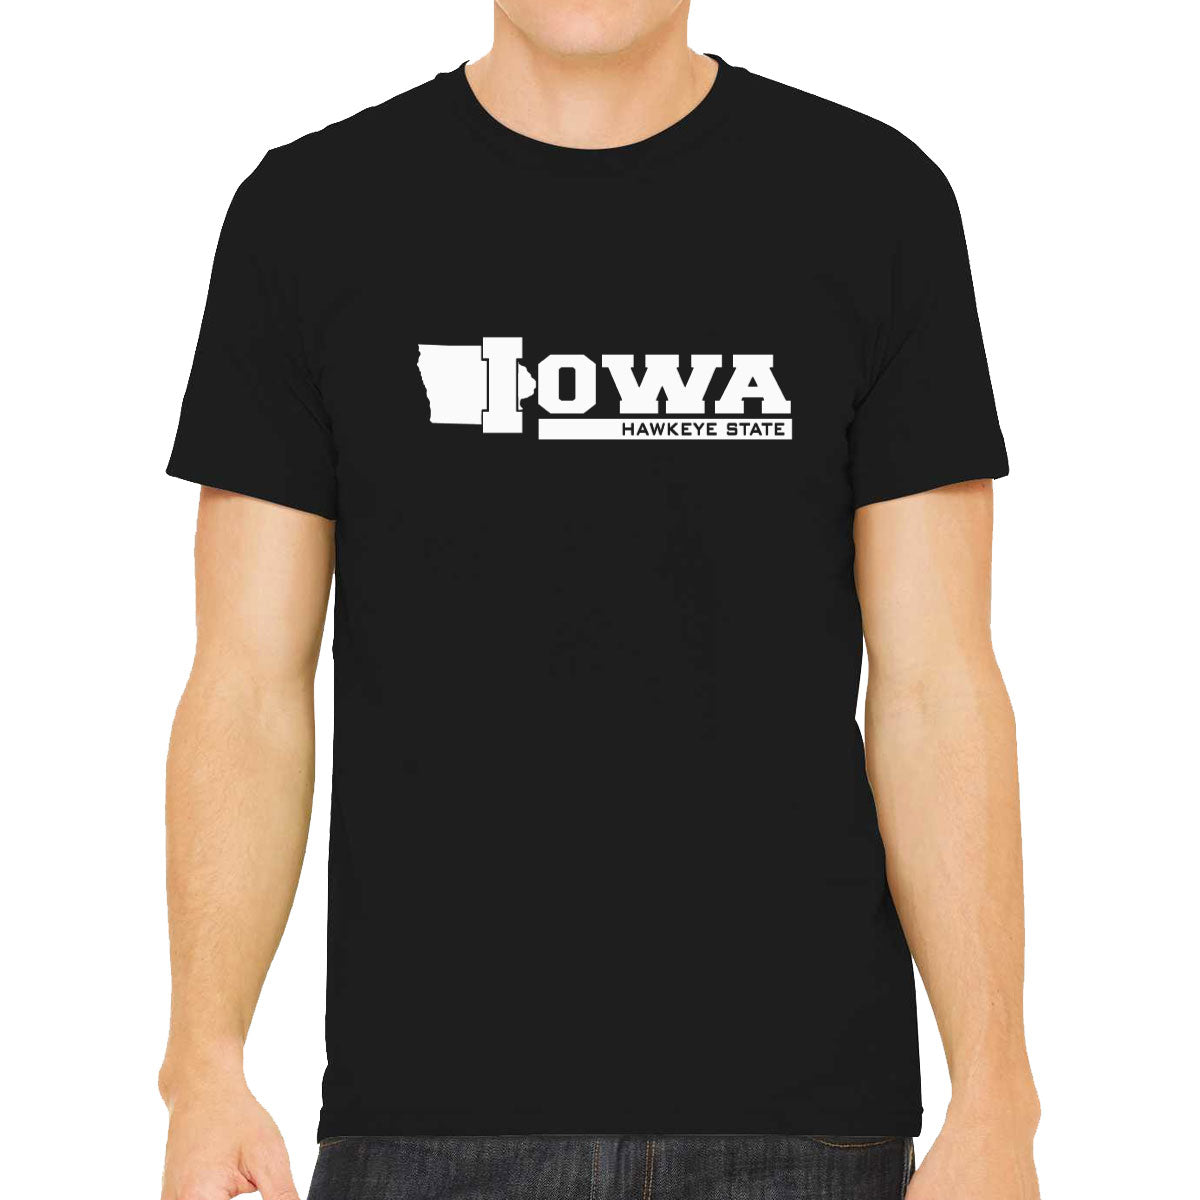 Iowa Hawkeye State Men's T-shirt